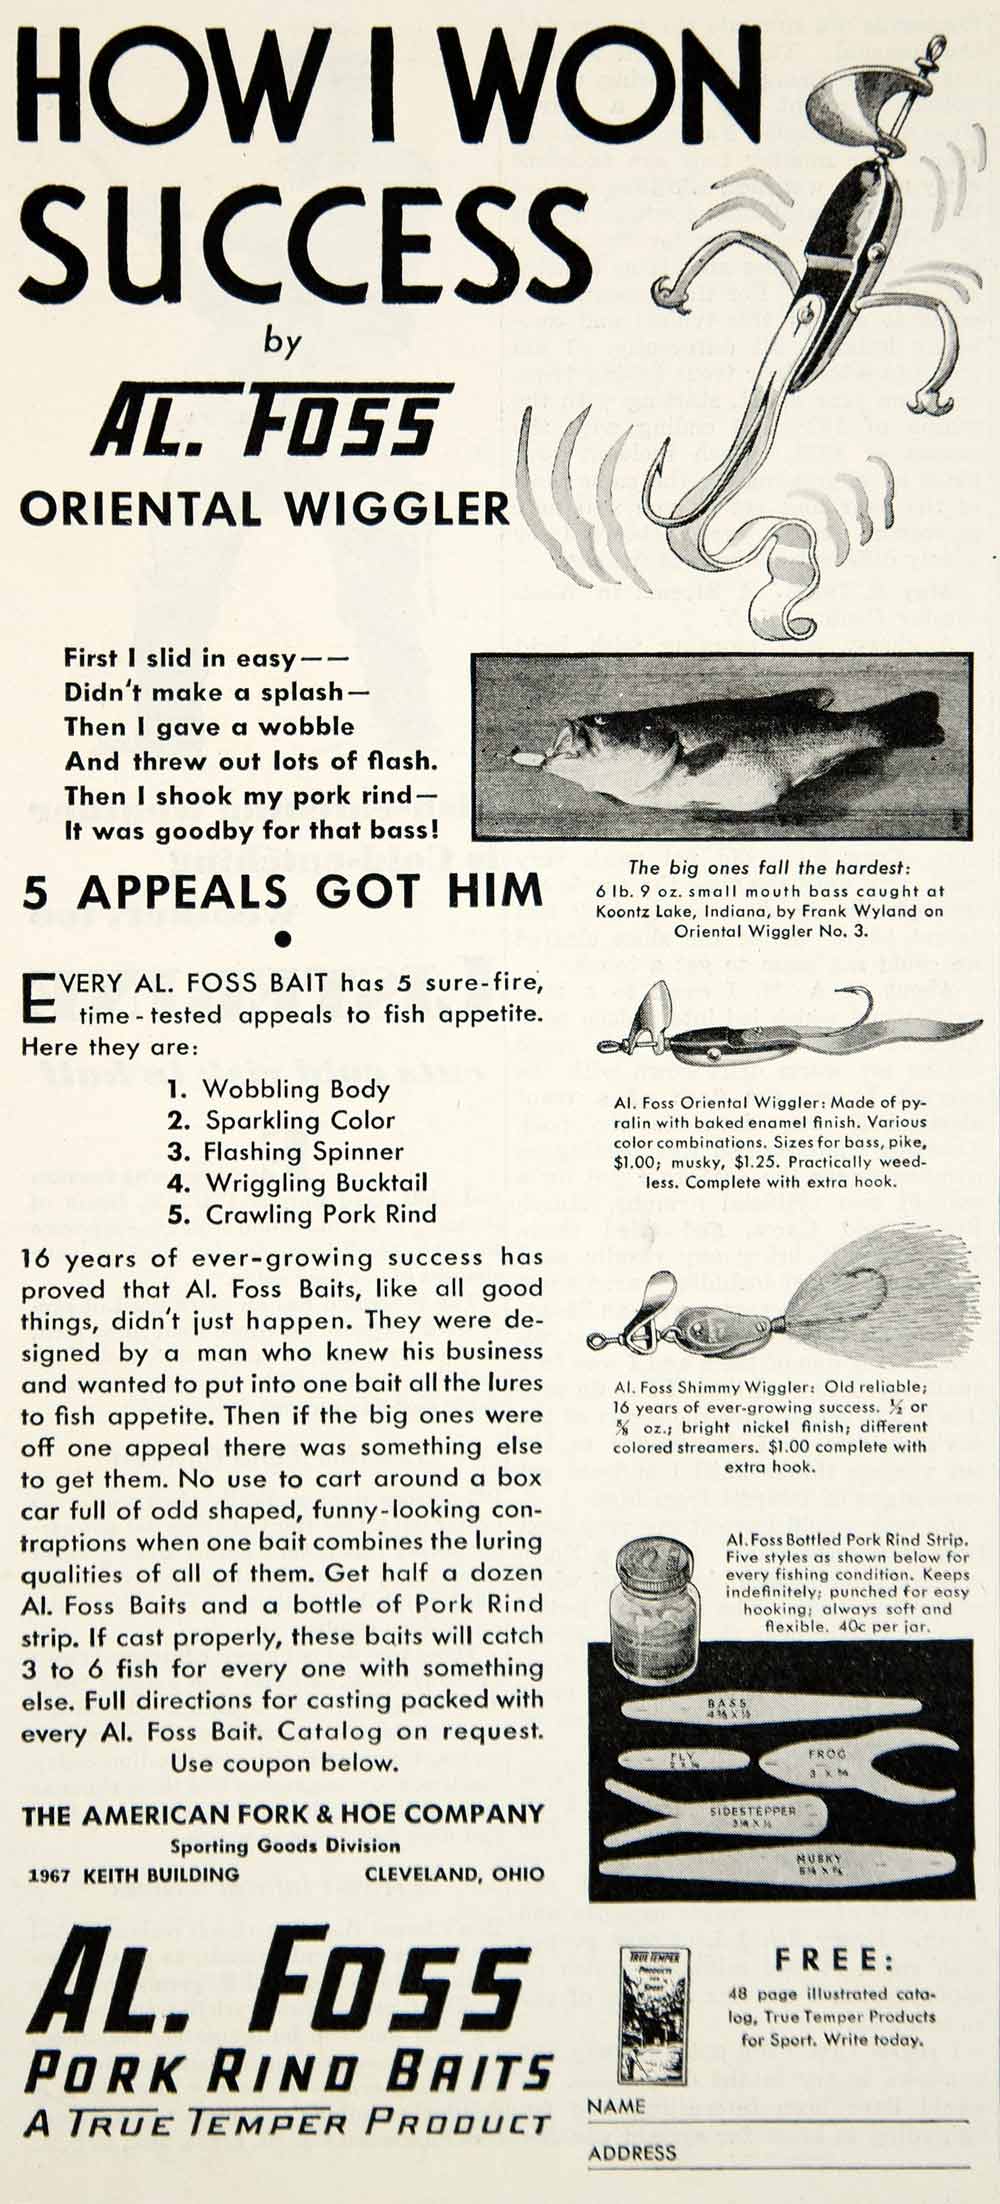 1932 Ad Pflueger Trout Fishing Tackle Medalist Supreme Atlapac Reel YH –  Period Paper Historic Art LLC